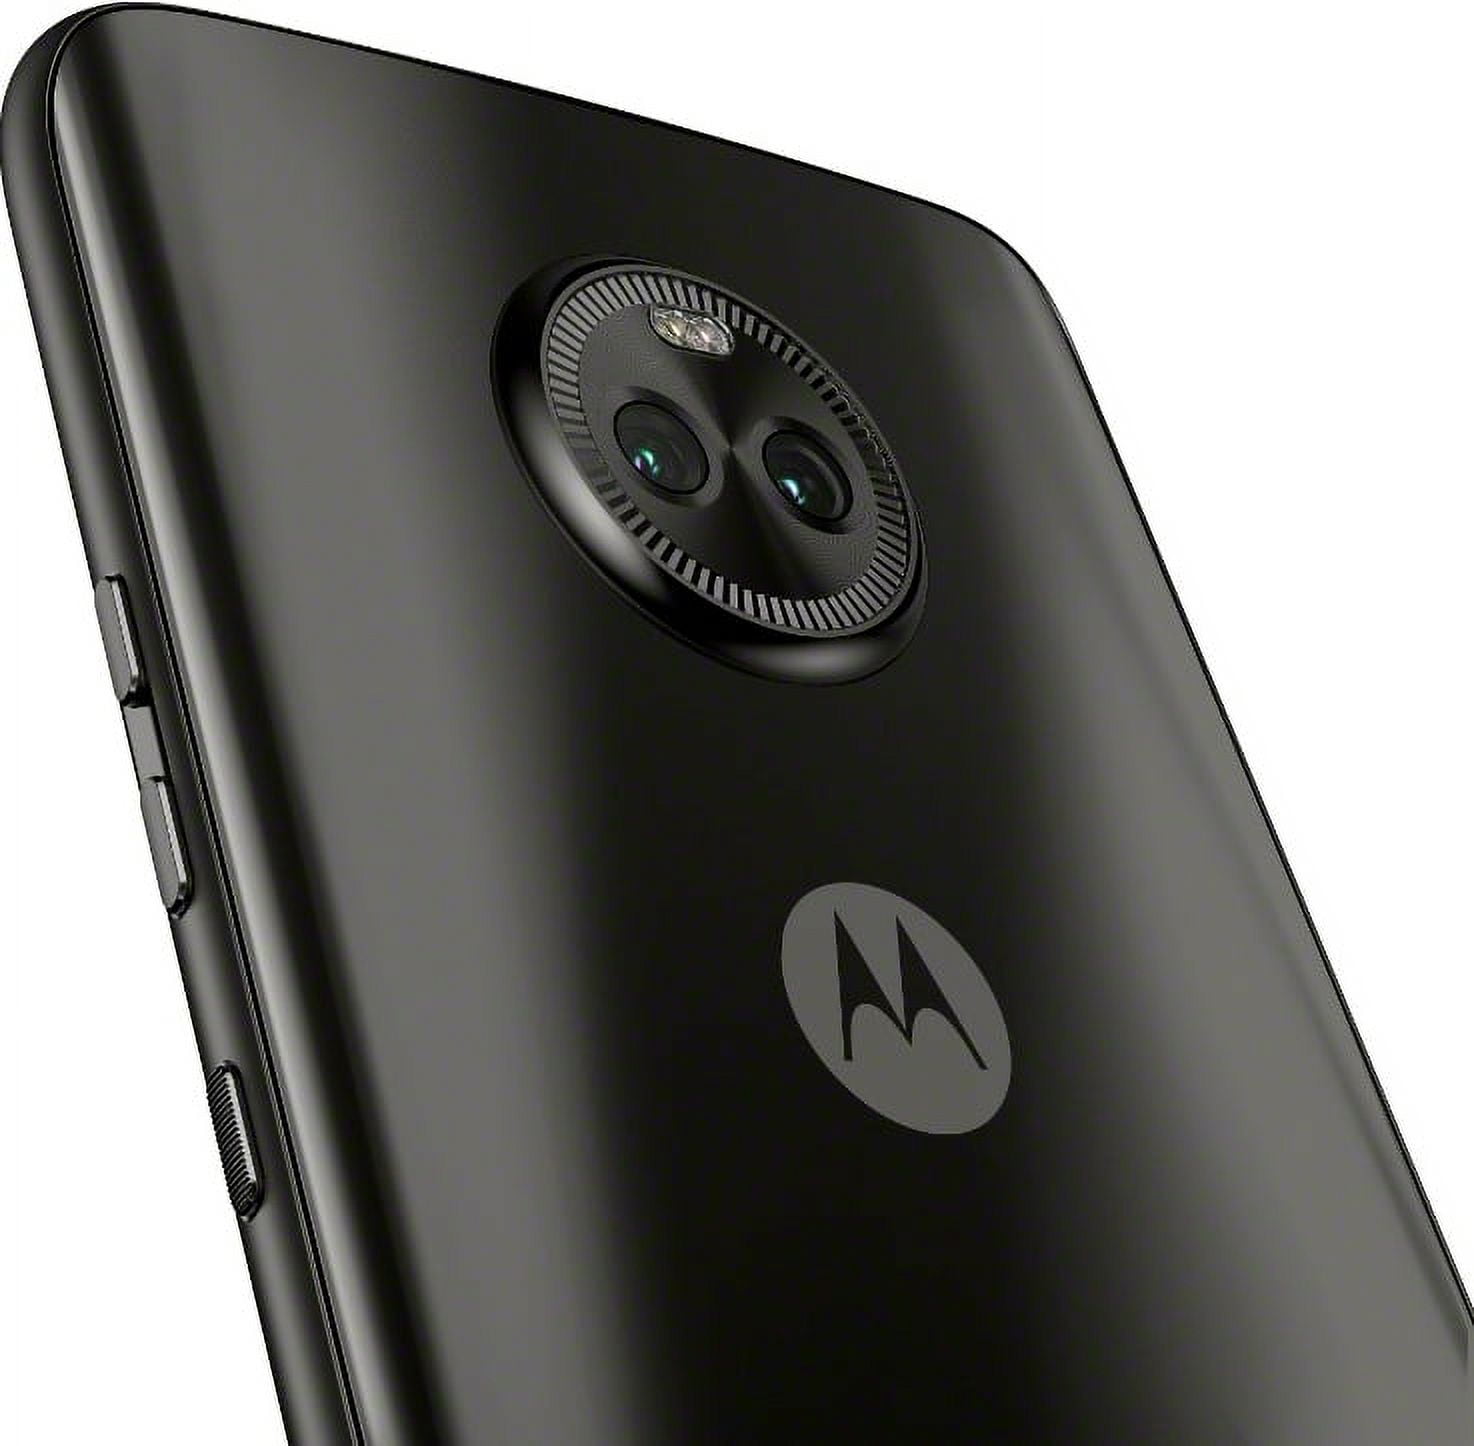 Motorola Moto X4 32GB Unlocked Smartphone, Super Black - Walmart.com